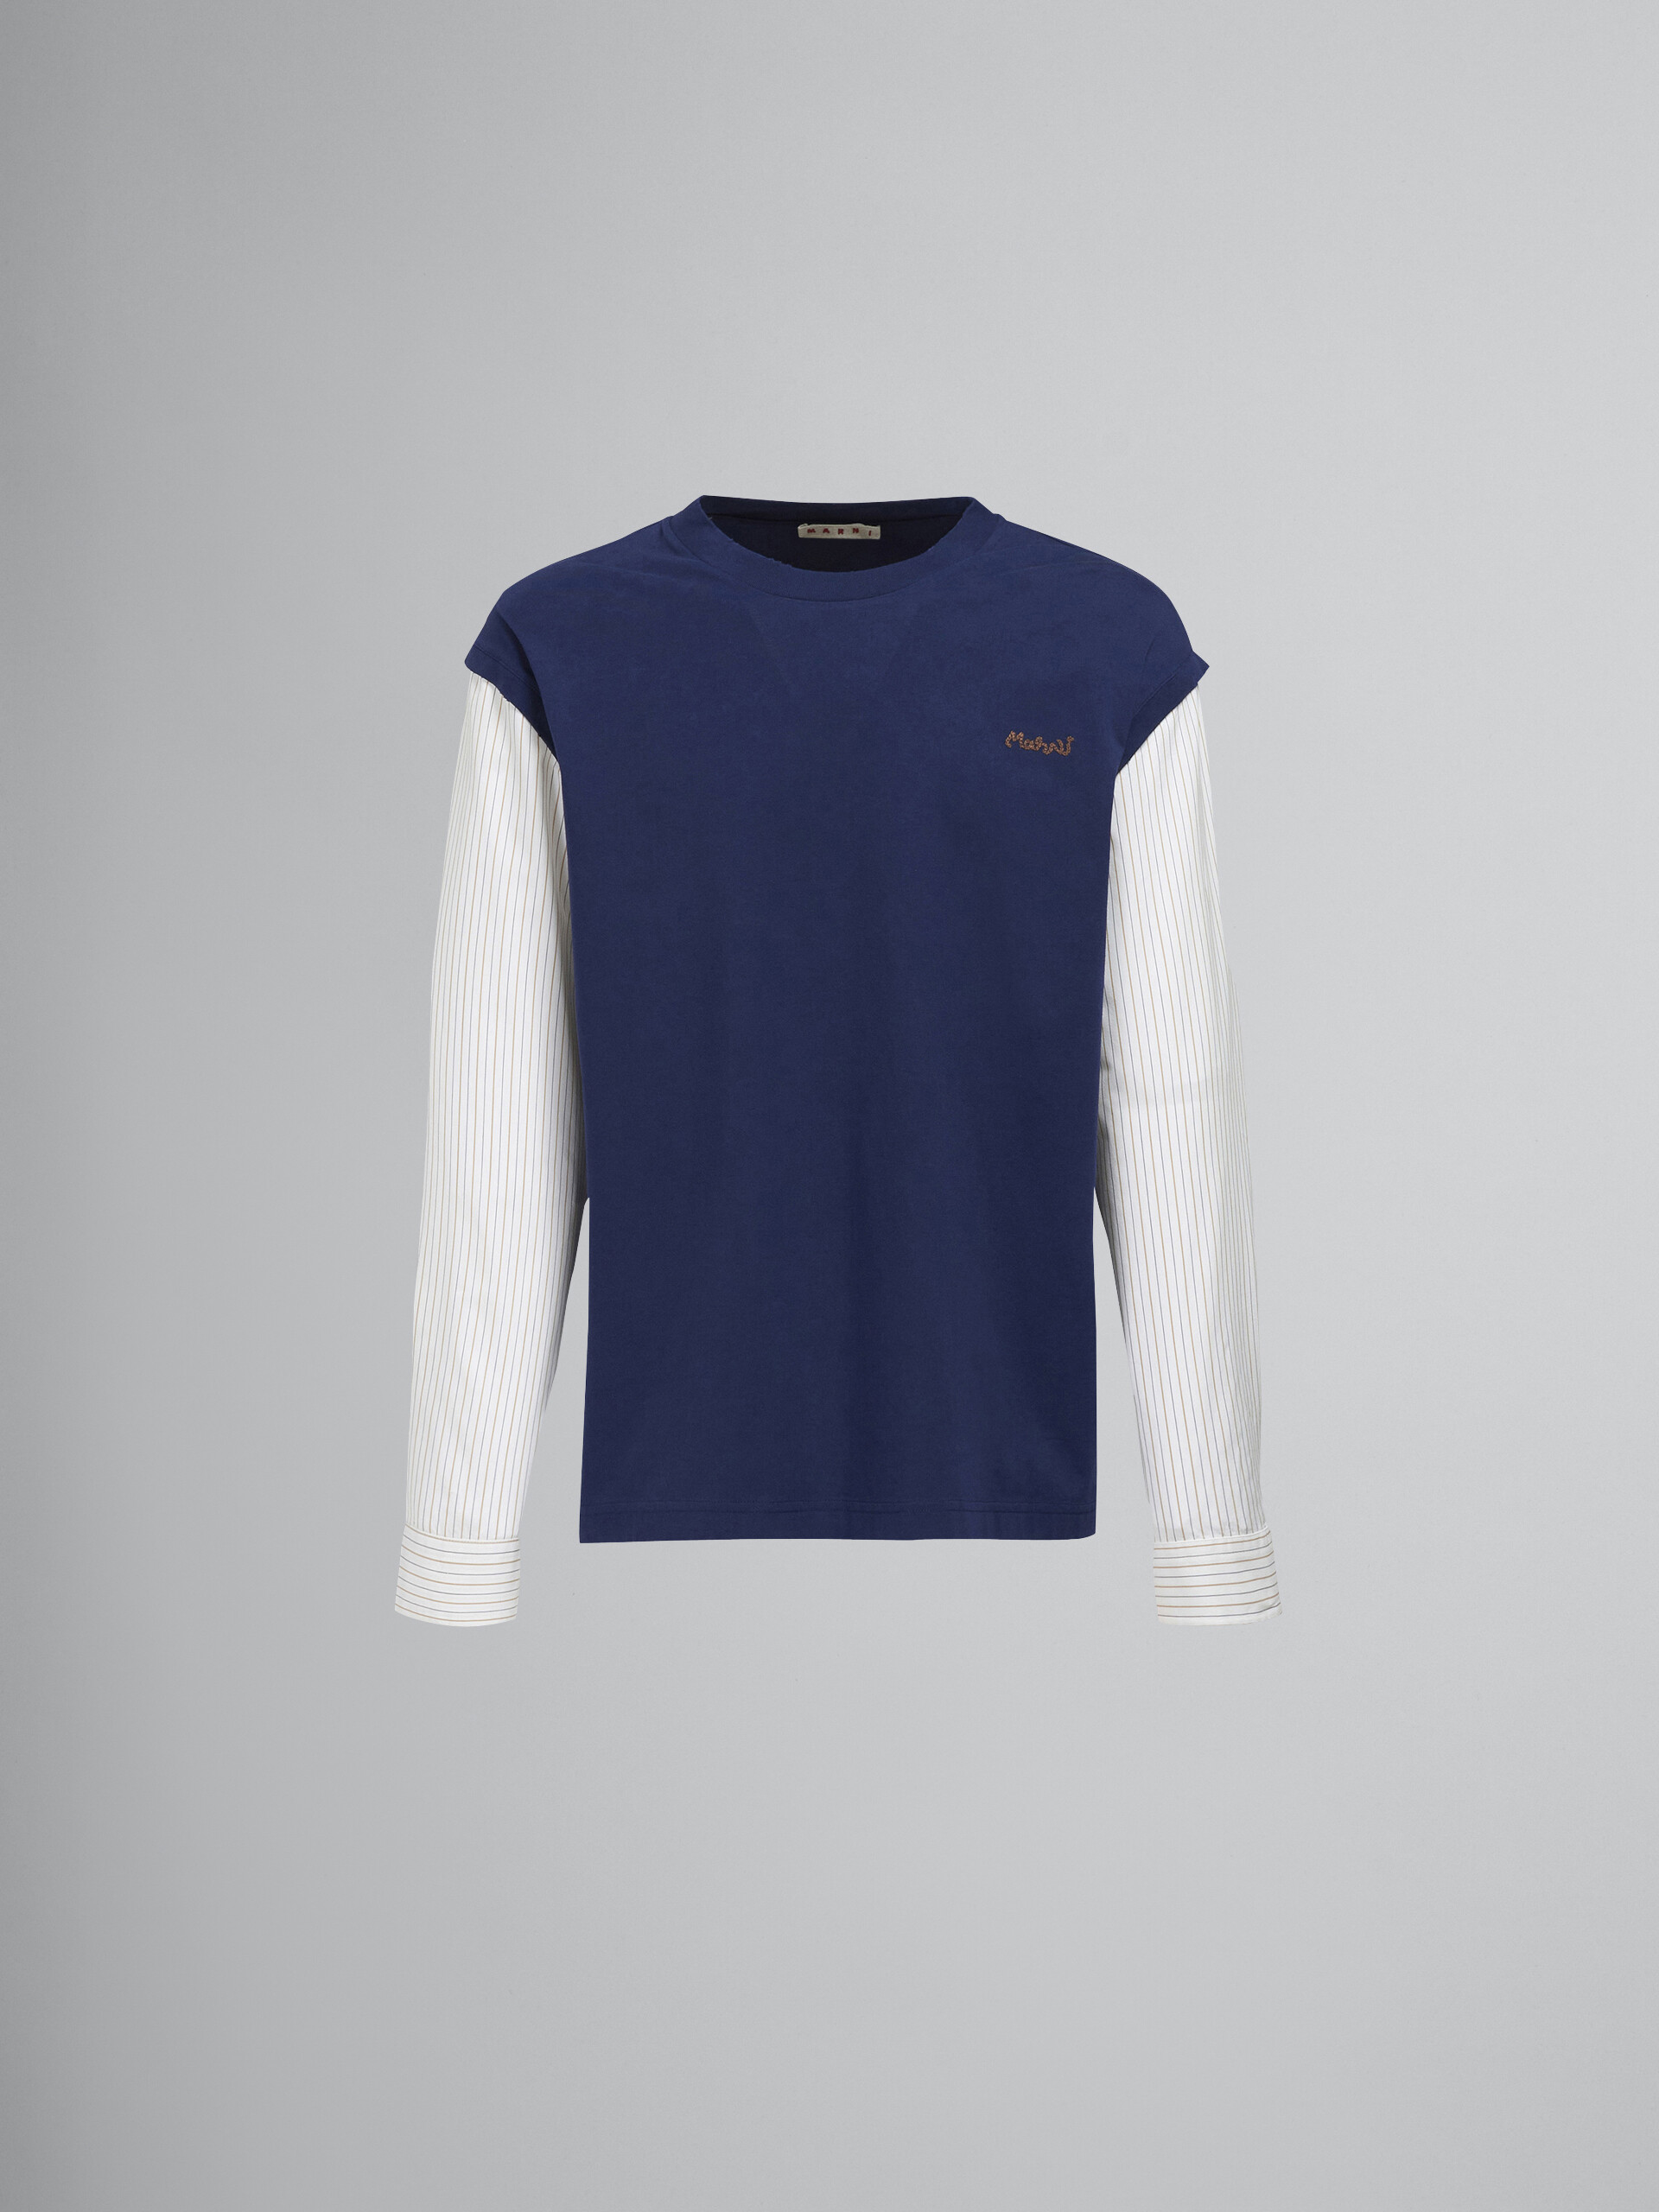 T-shirt in jersey blu con maniche in popeline rigato - T-shirt - Image 1